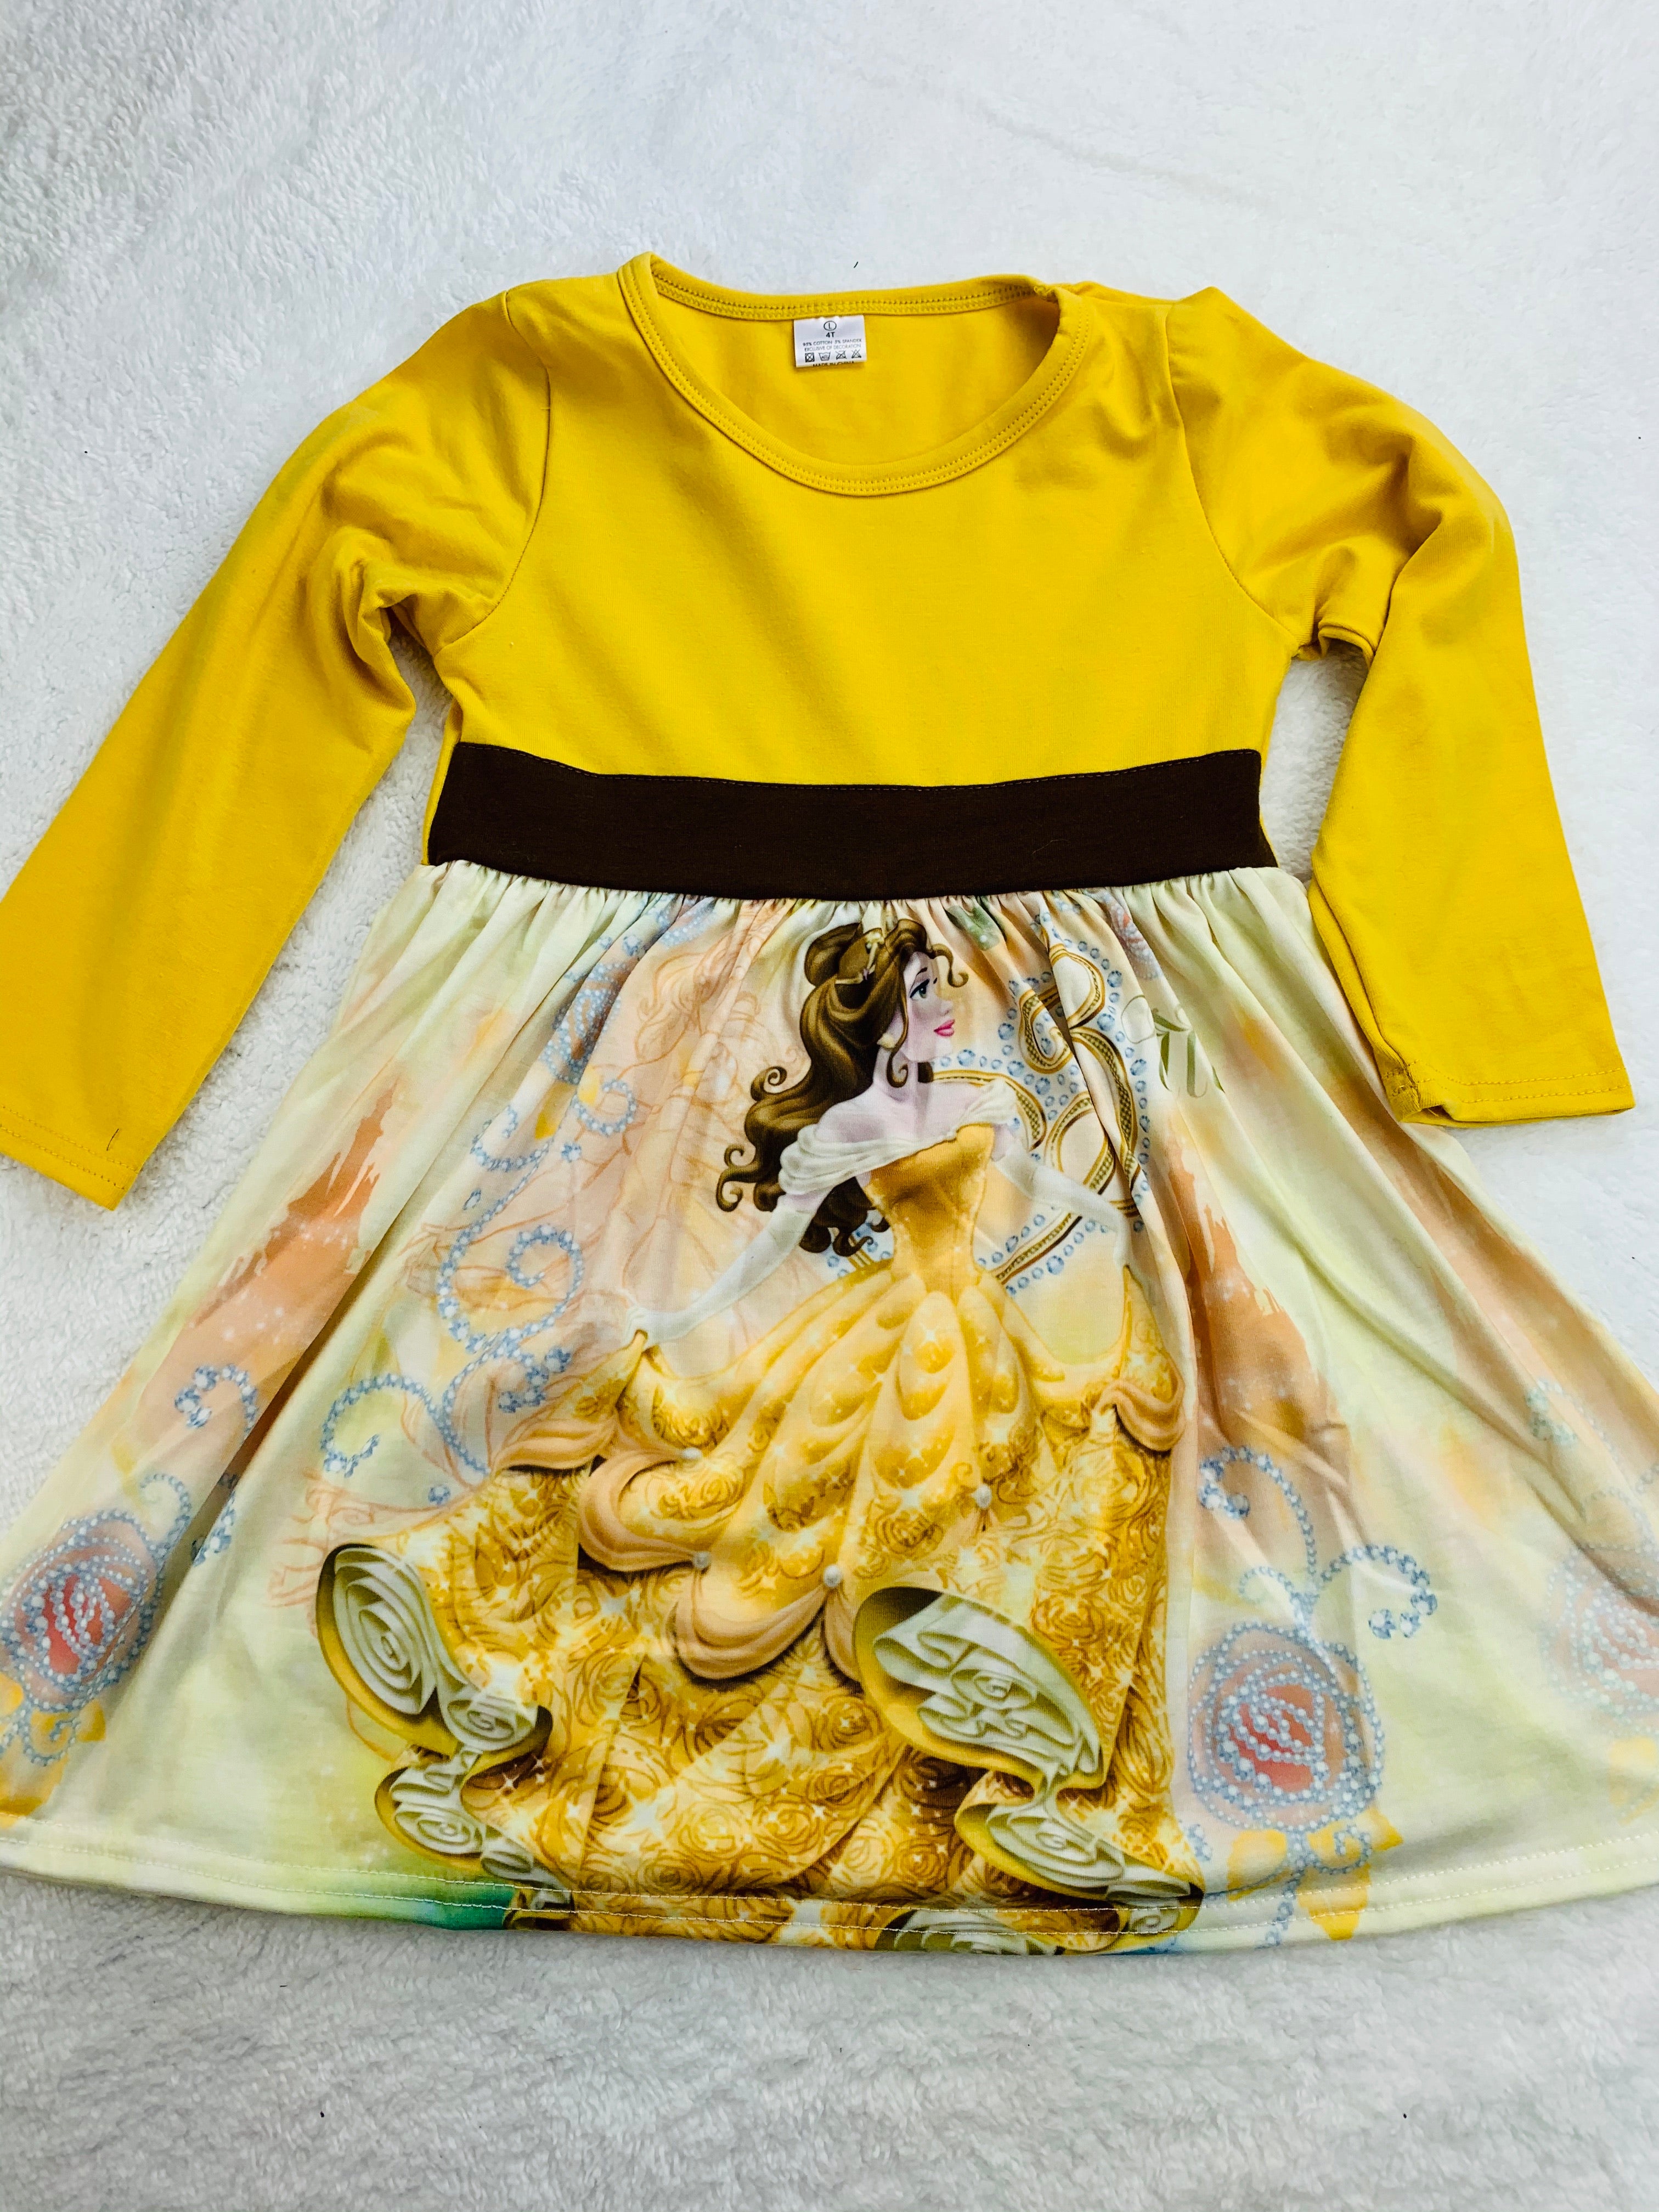 yellow dress 4t